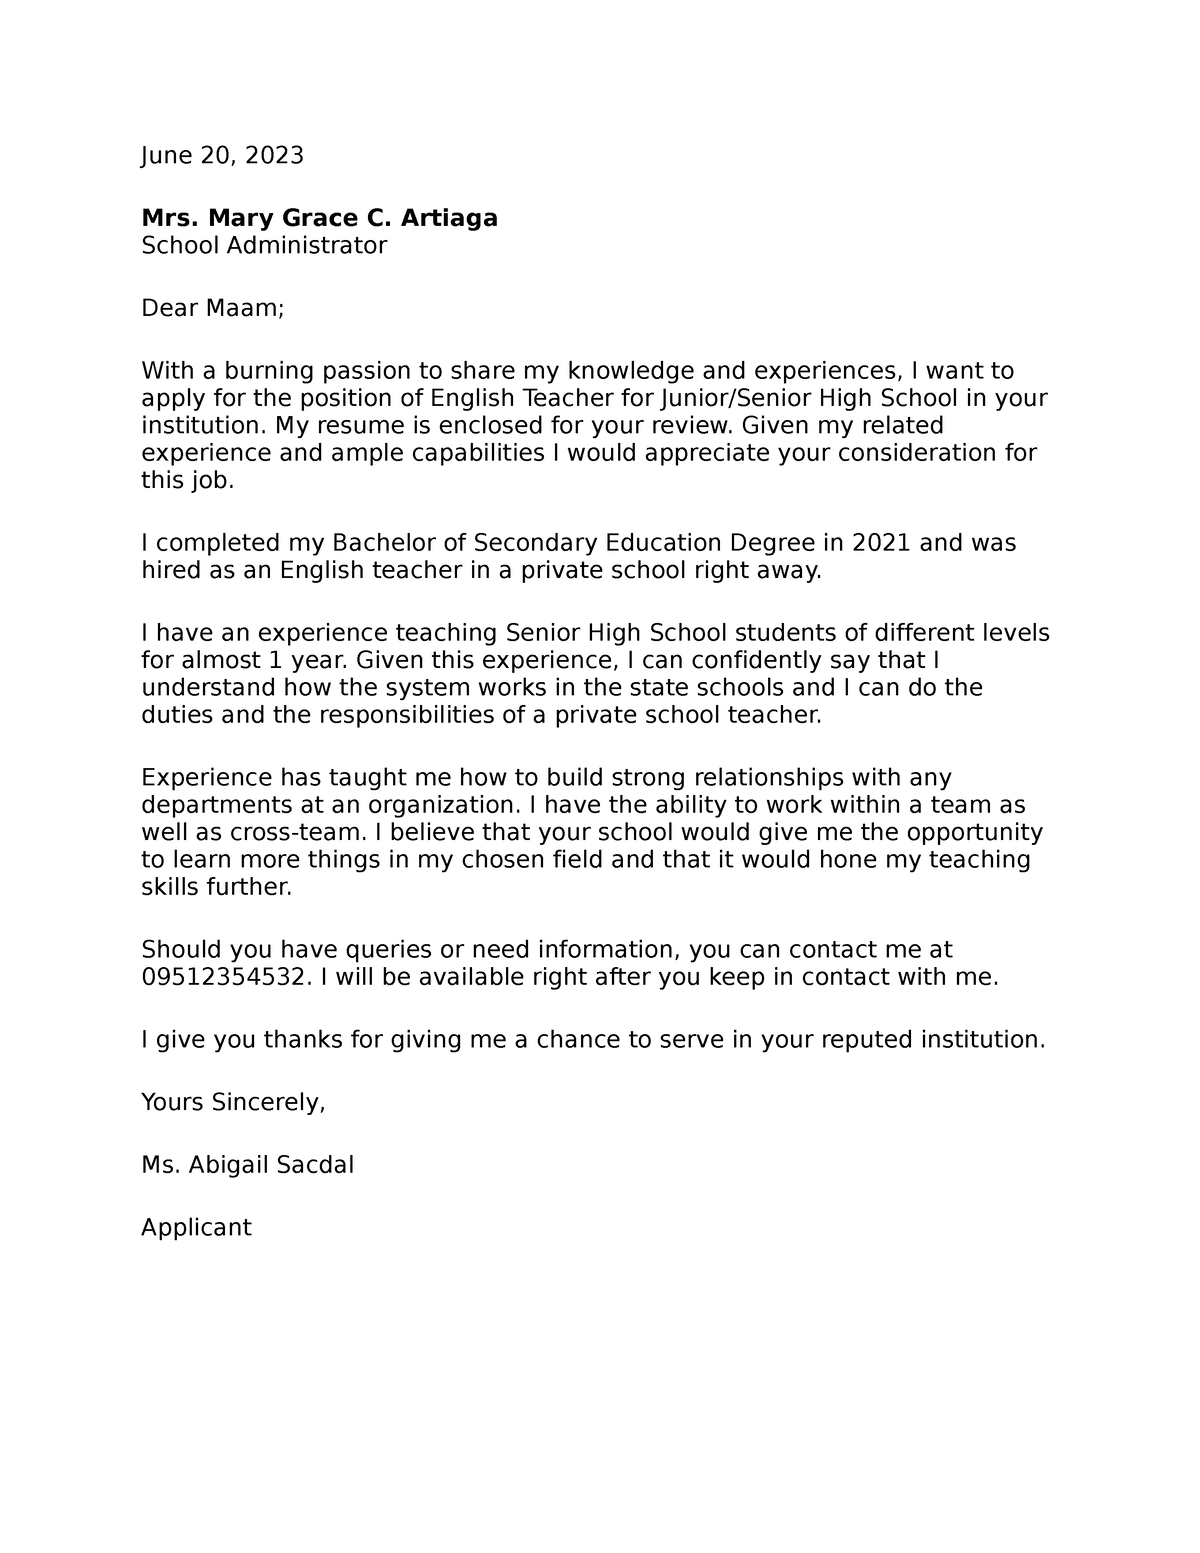 Application letter (sacdal) - June 20, 2023 Mrs. Mary Grace C. Artiaga ...